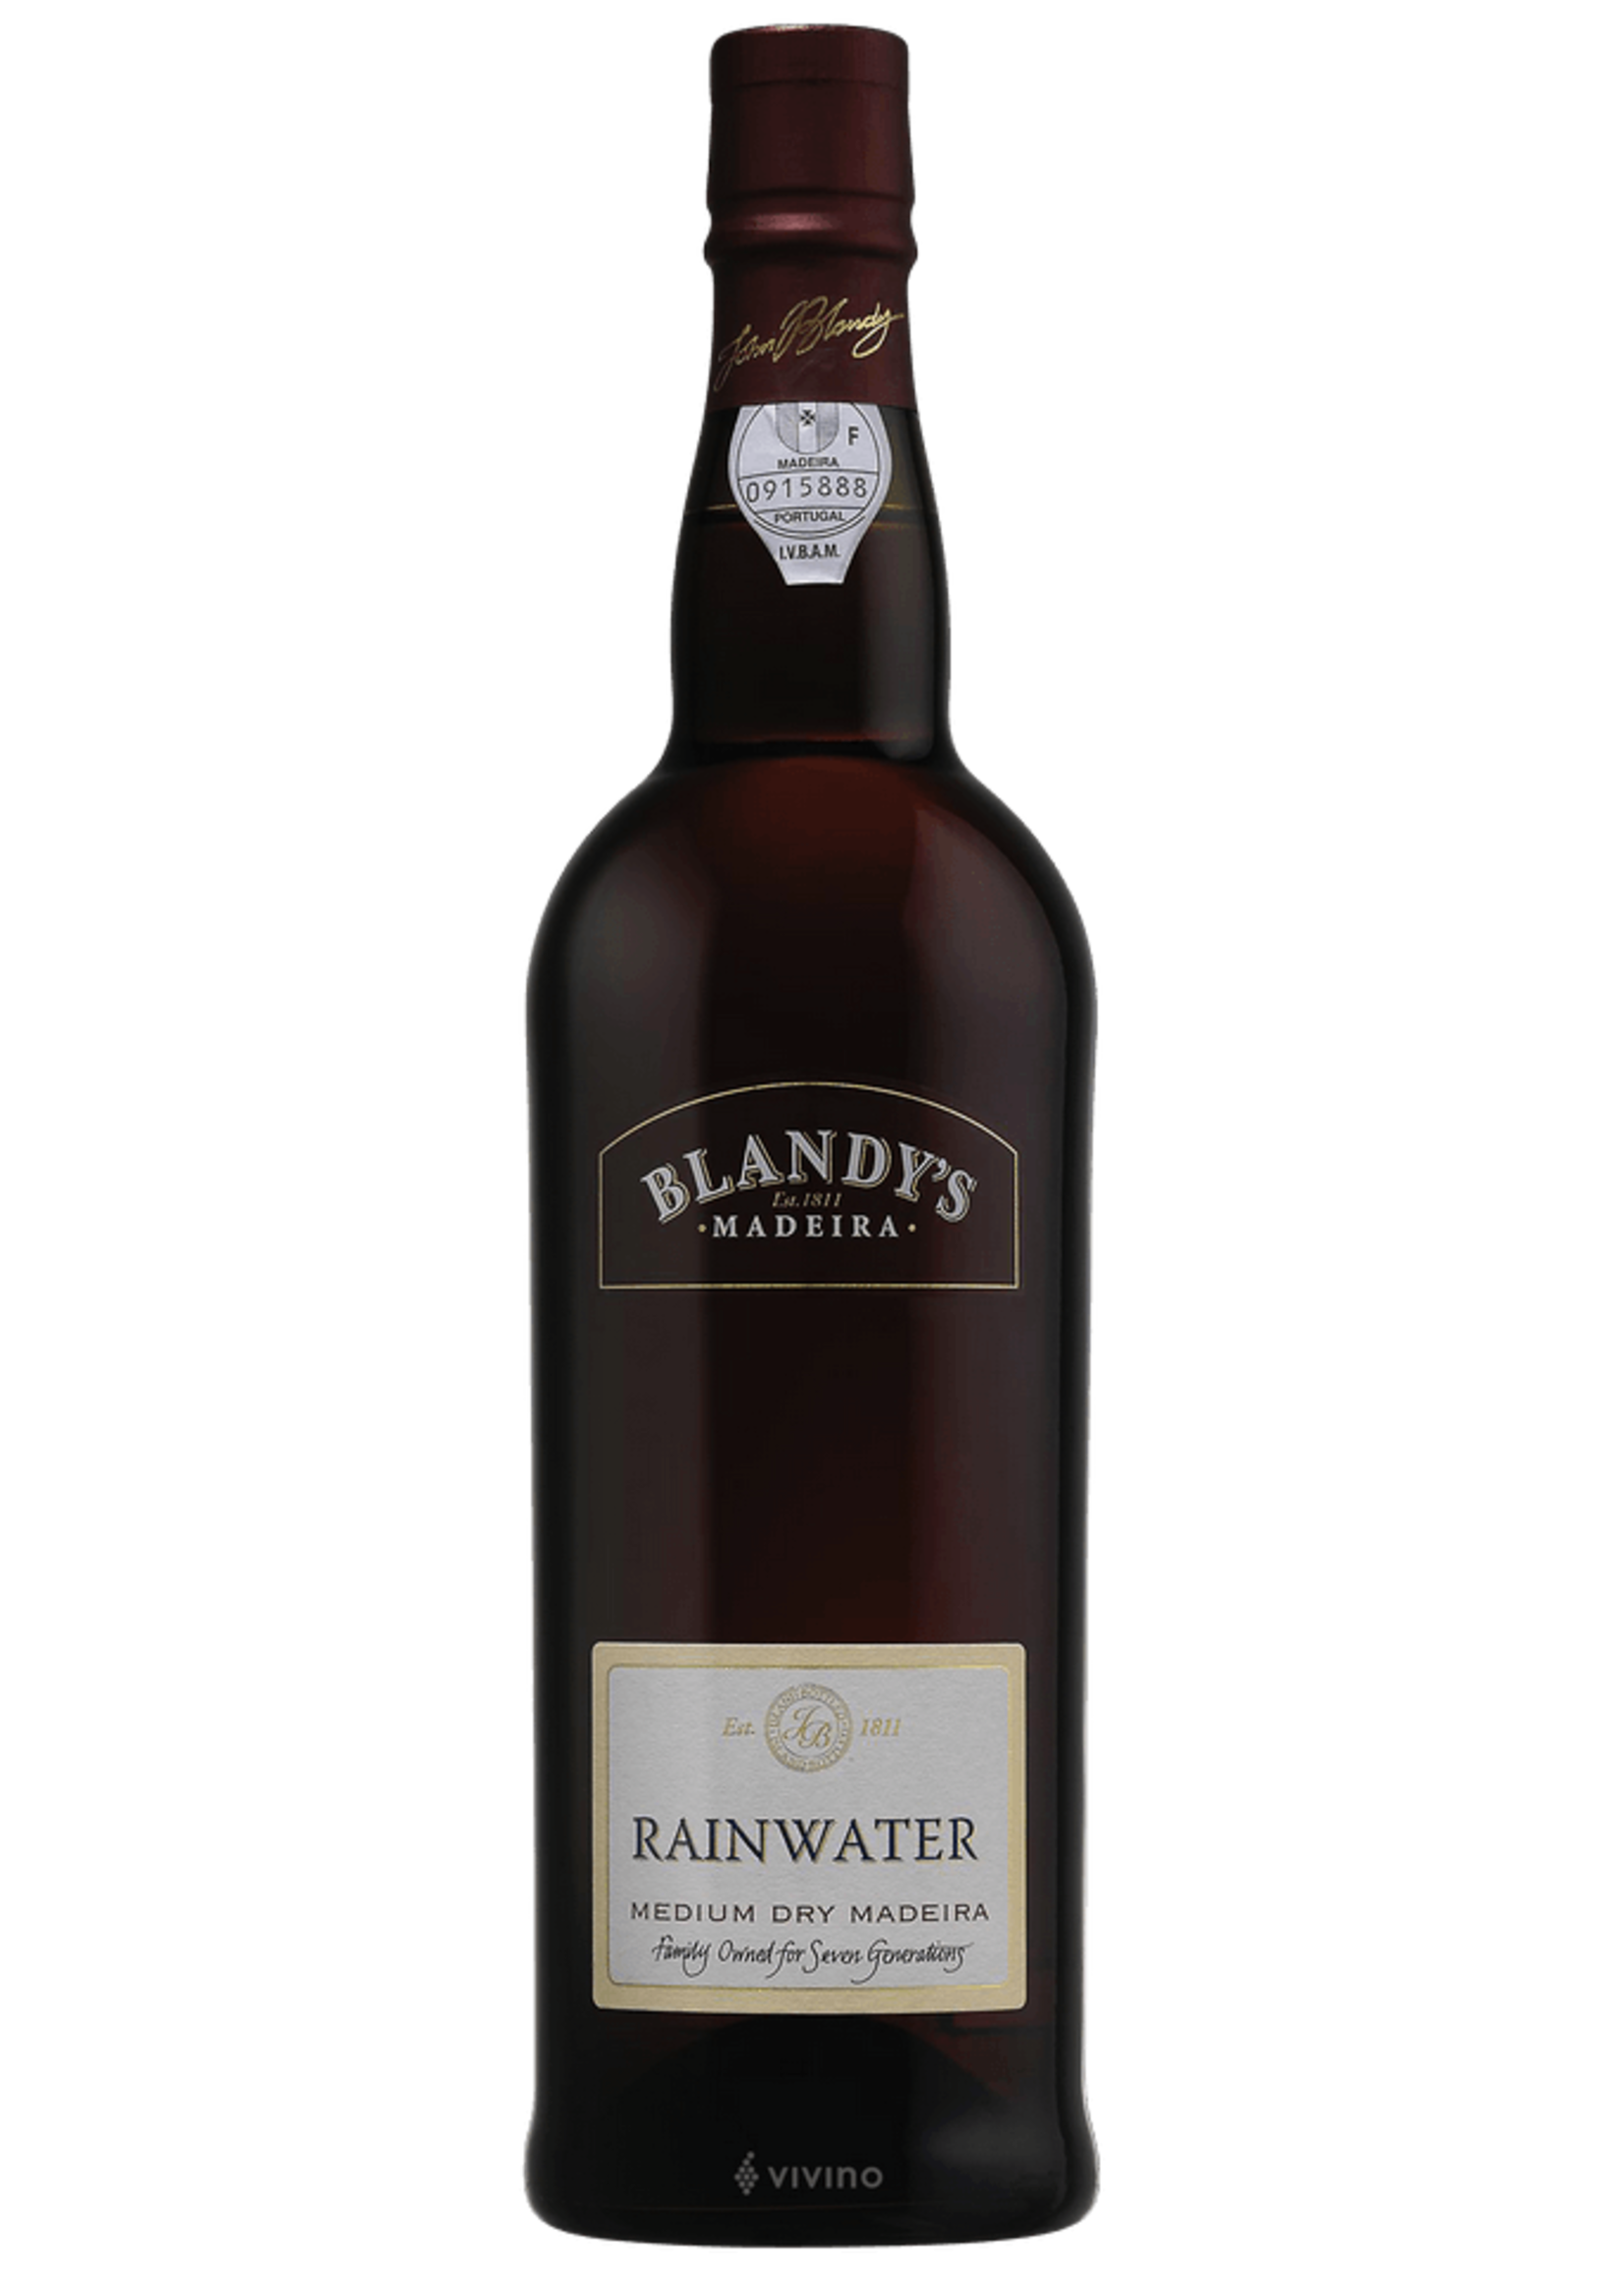 Blandy's Blandy's / Rainwater Medium Dry Madeira / 750mL